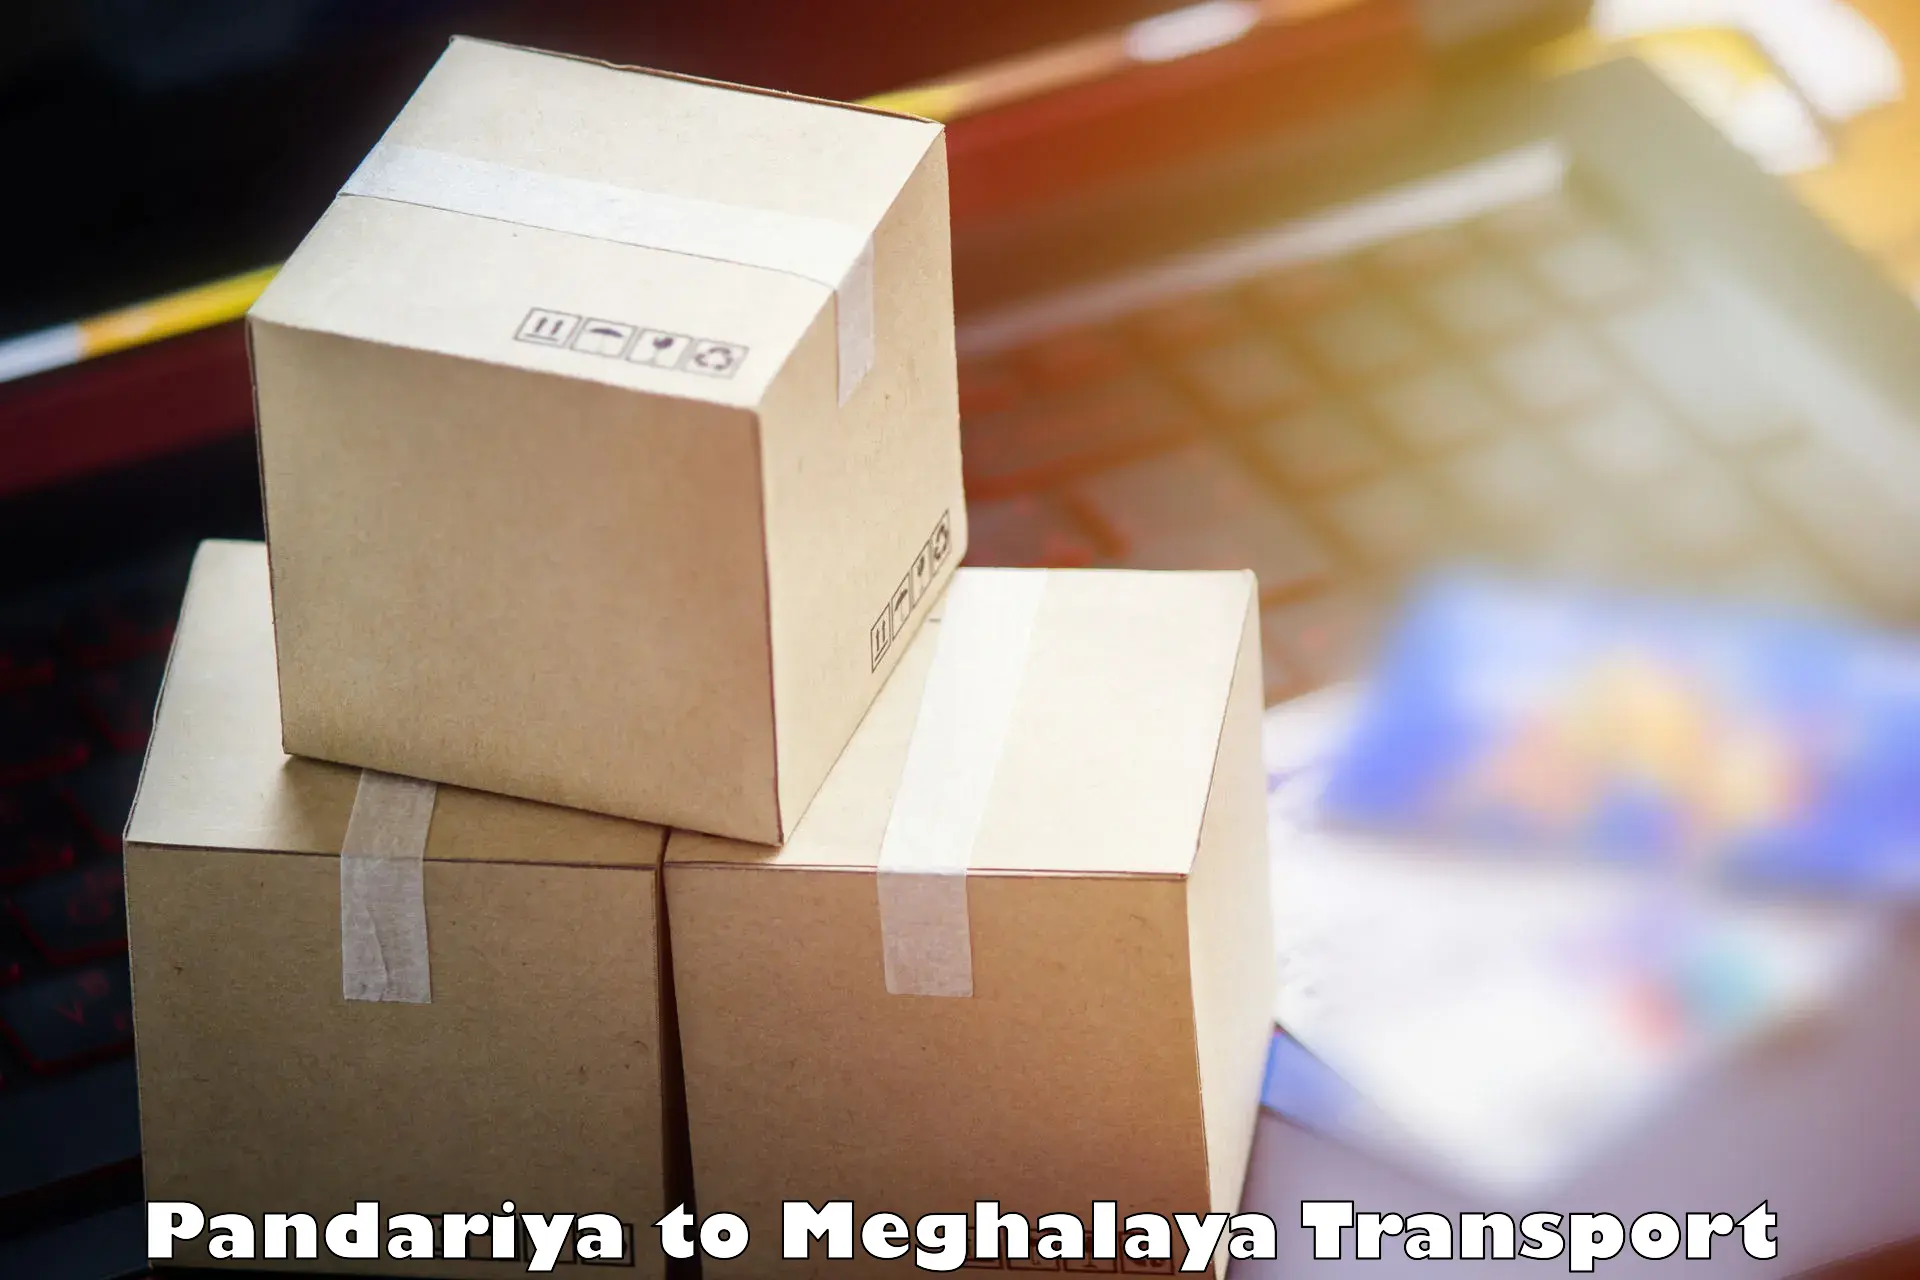 Nearby transport service Pandariya to Meghalaya